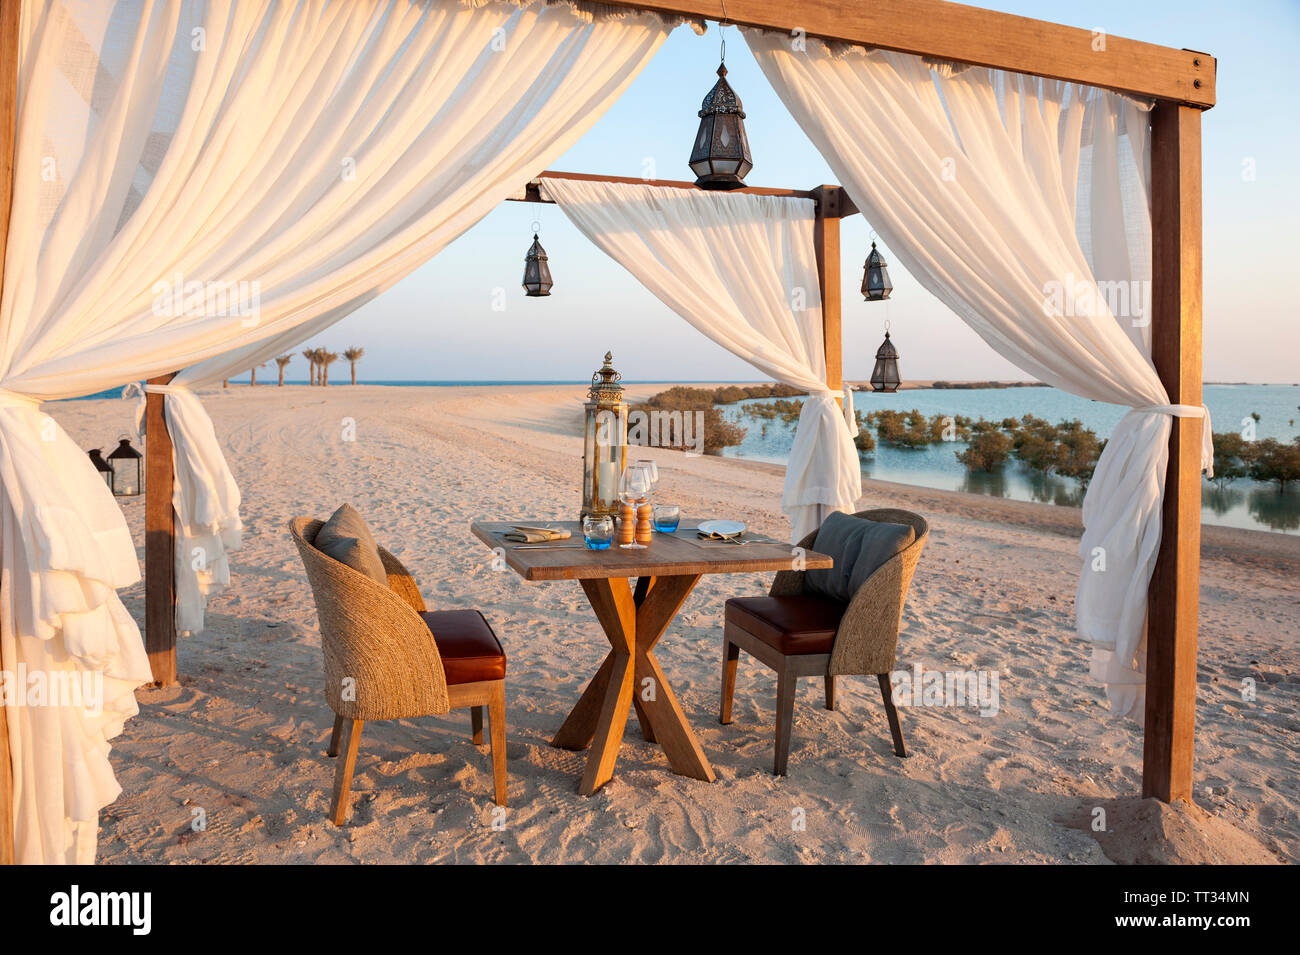 Dining by Design, private dining, at the Anantara Al Yamm Villa Resort on Sir Bani Yas, United Arab Emirates. Stock Photo